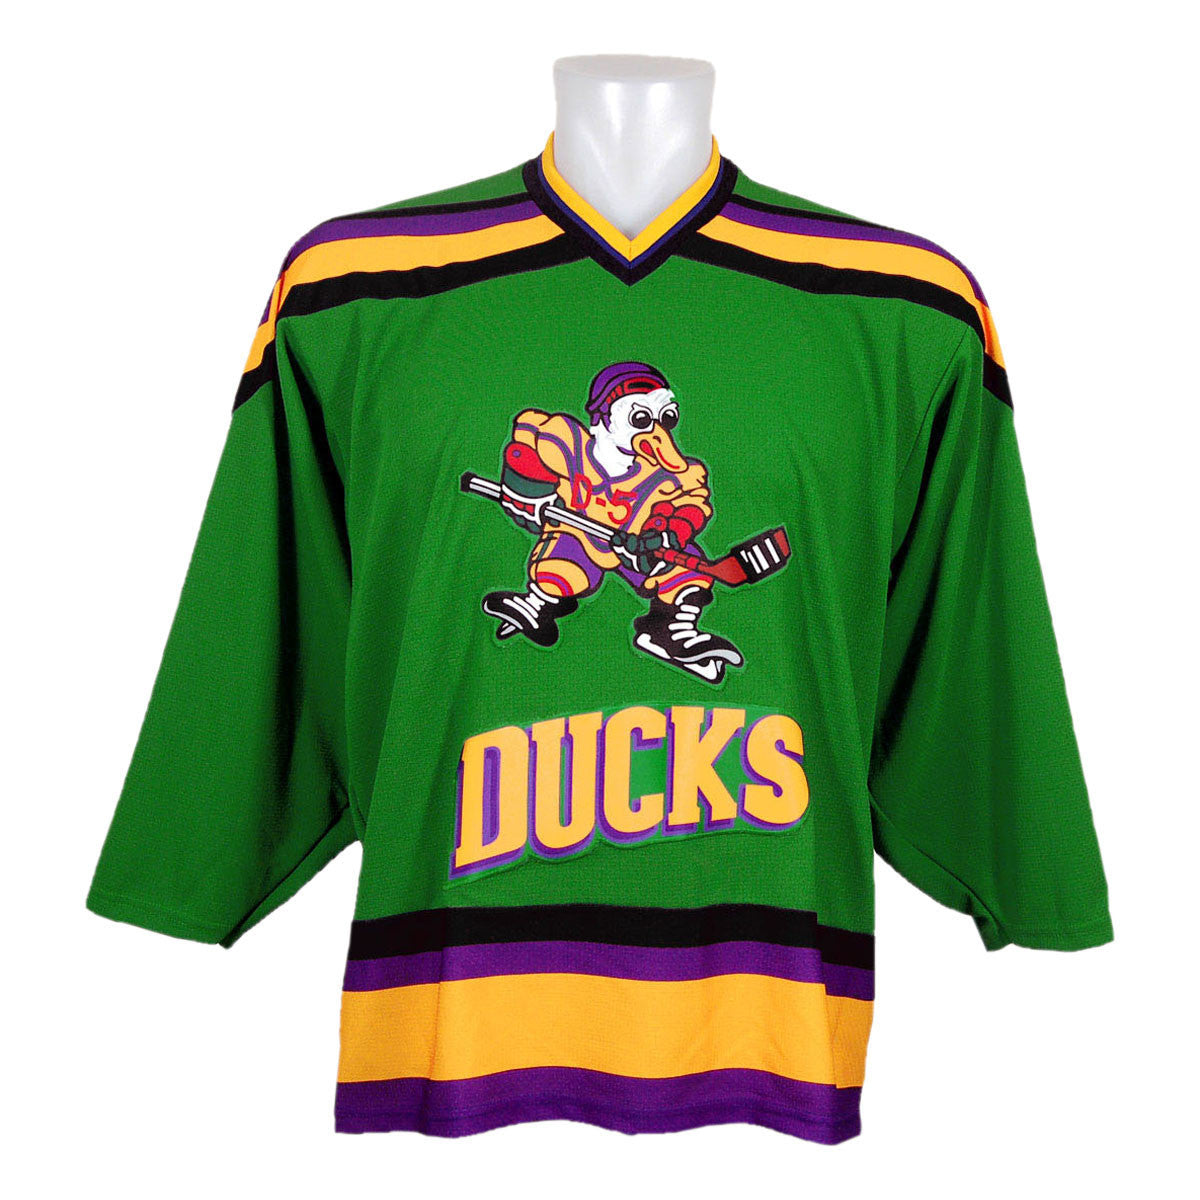 buy mighty ducks movie jersey